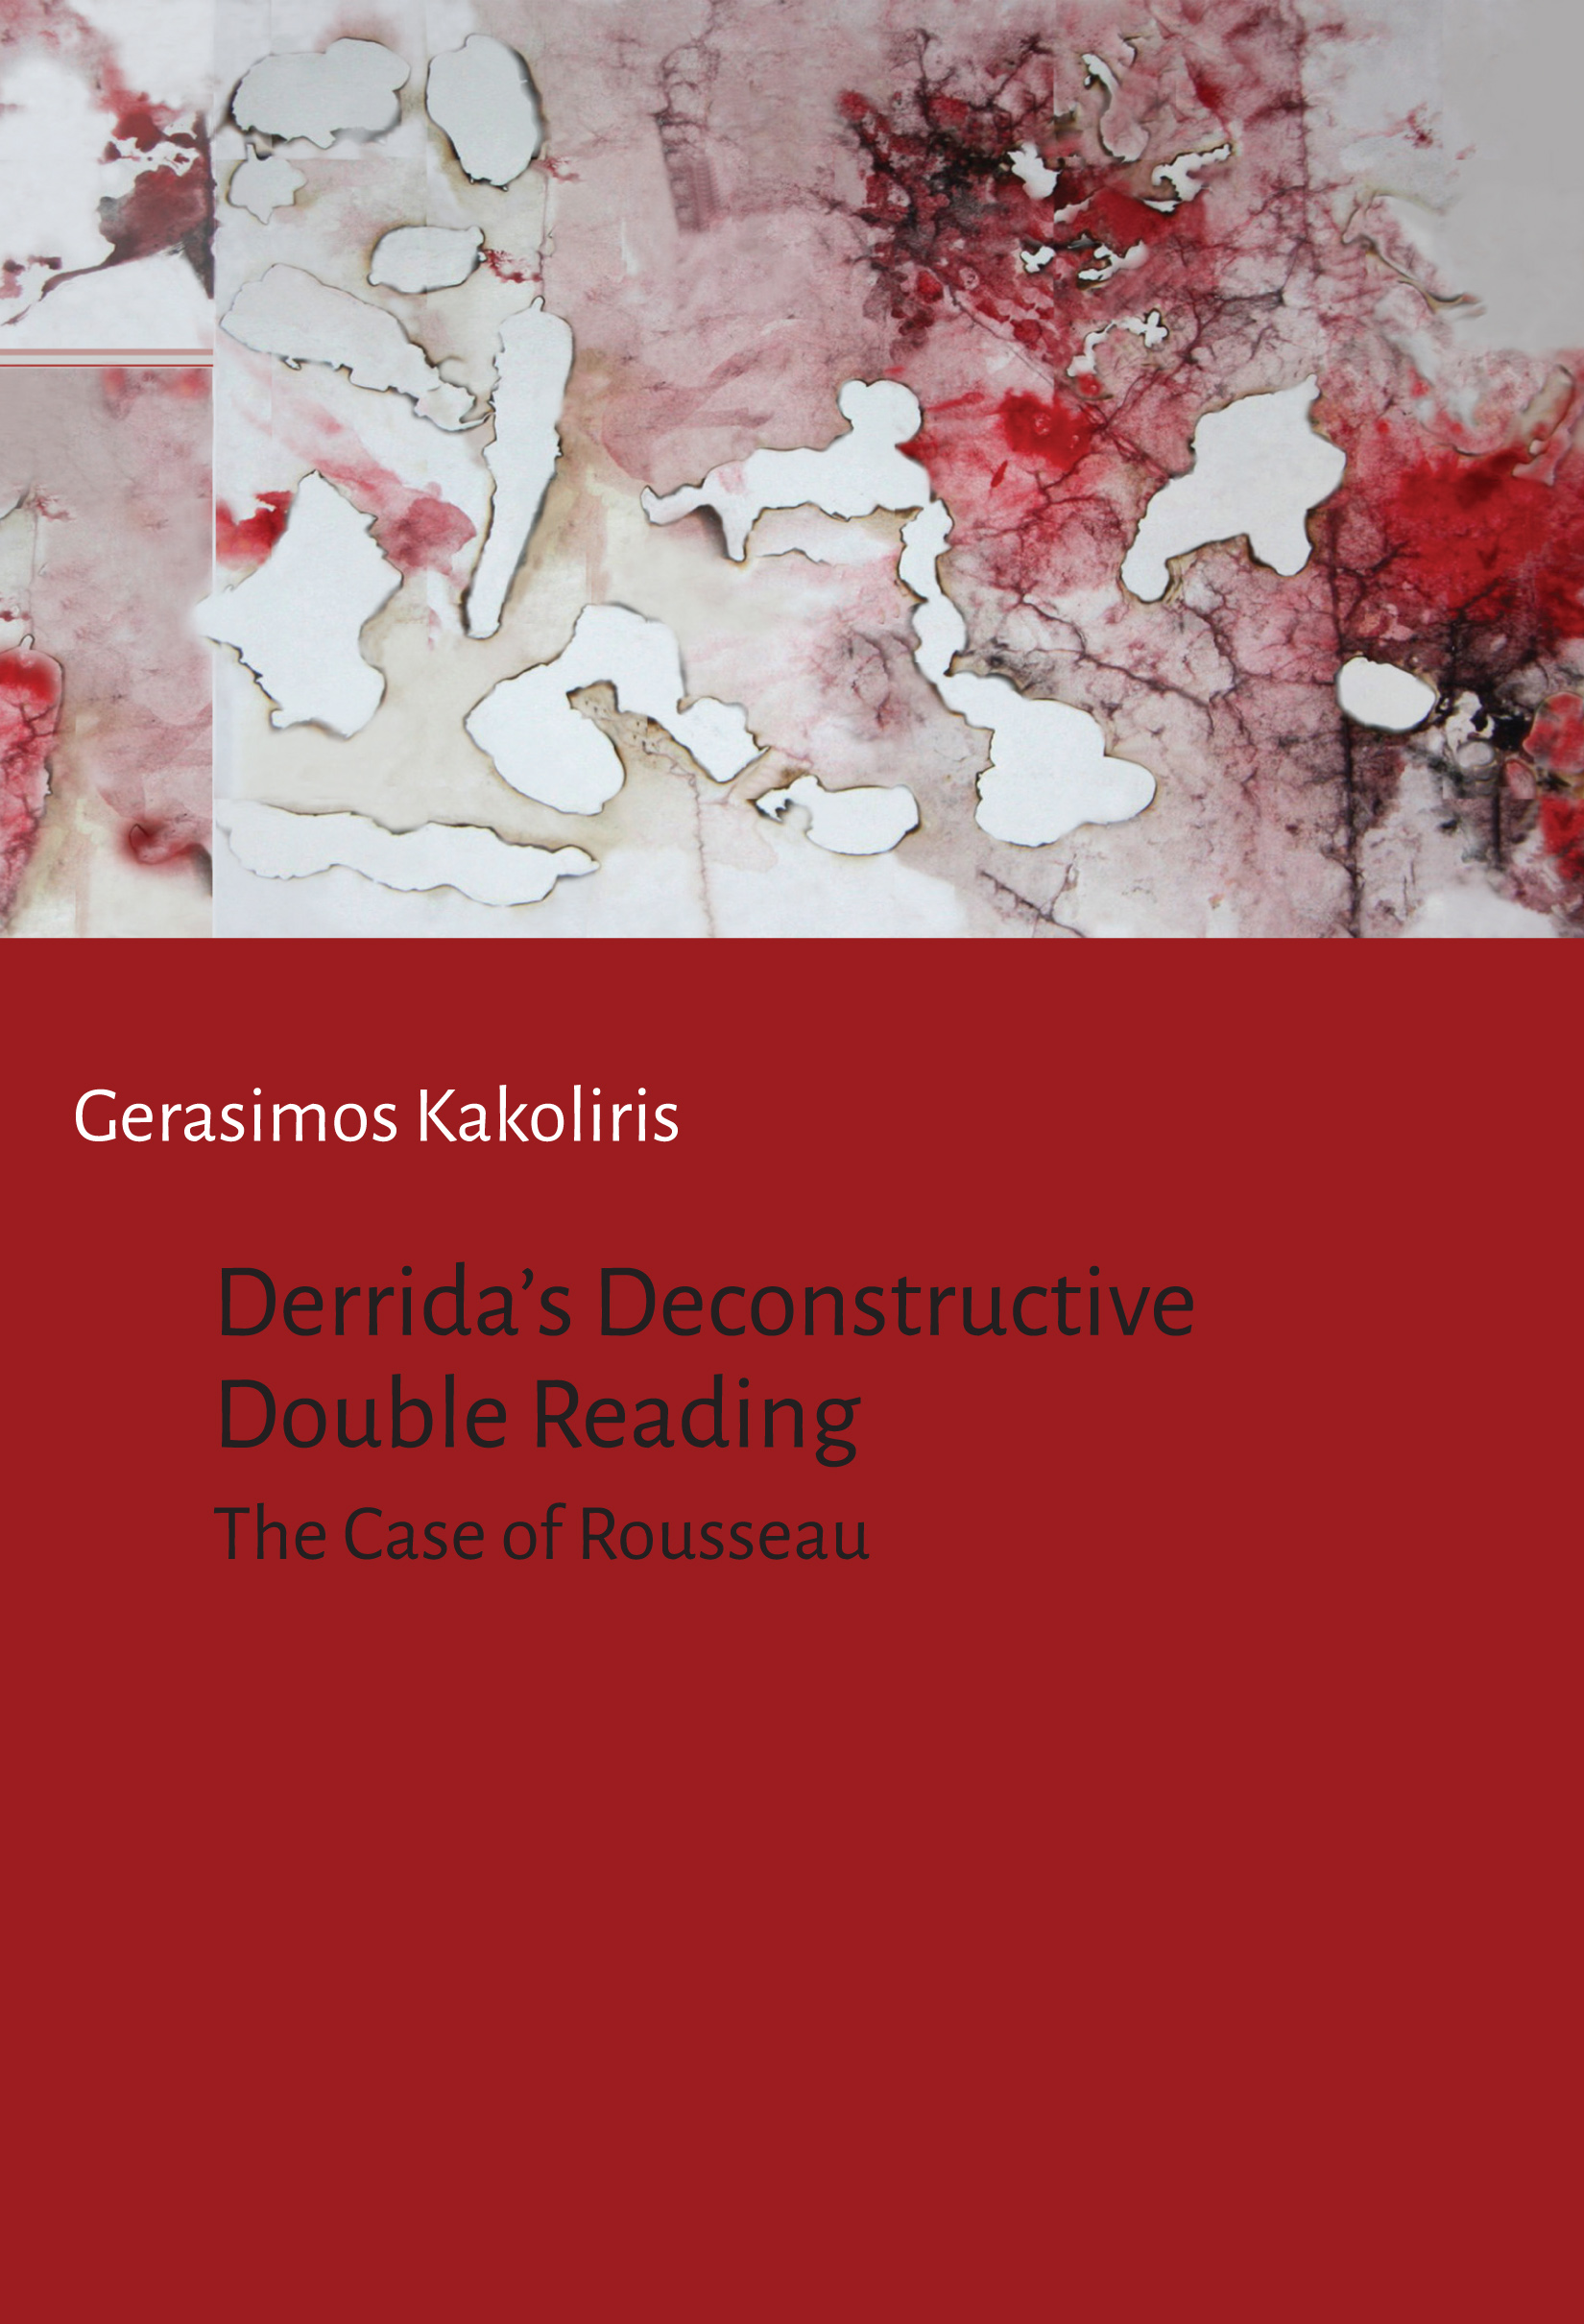 Derrida's Deconstructive. Double Reading